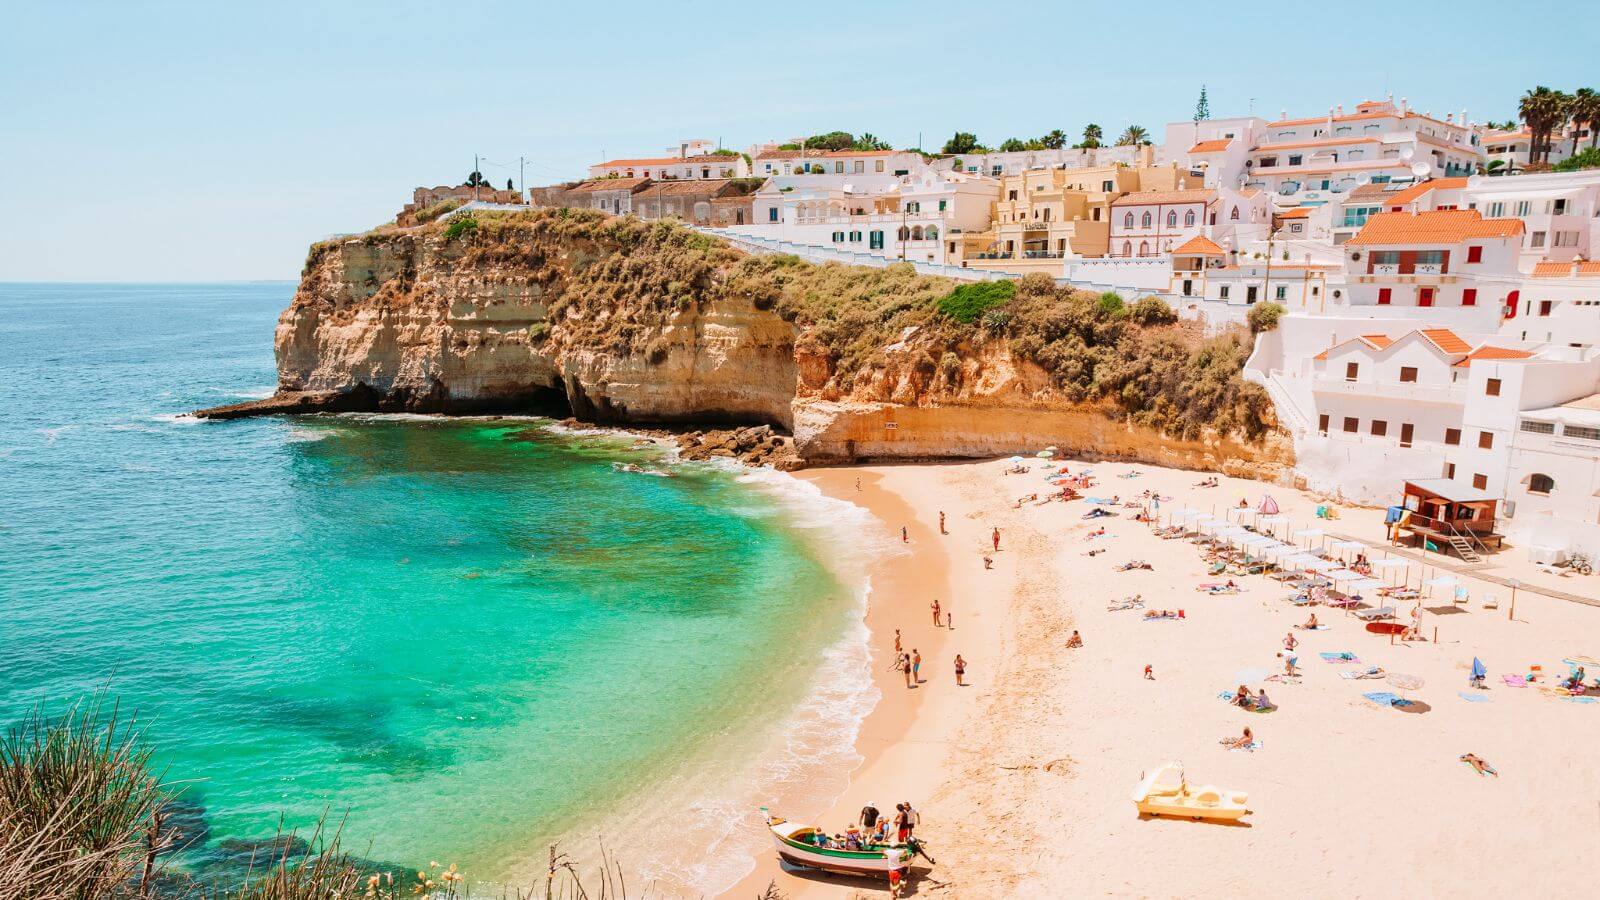 Europe's Best Value Beach Destinations The Algarve, Portugal